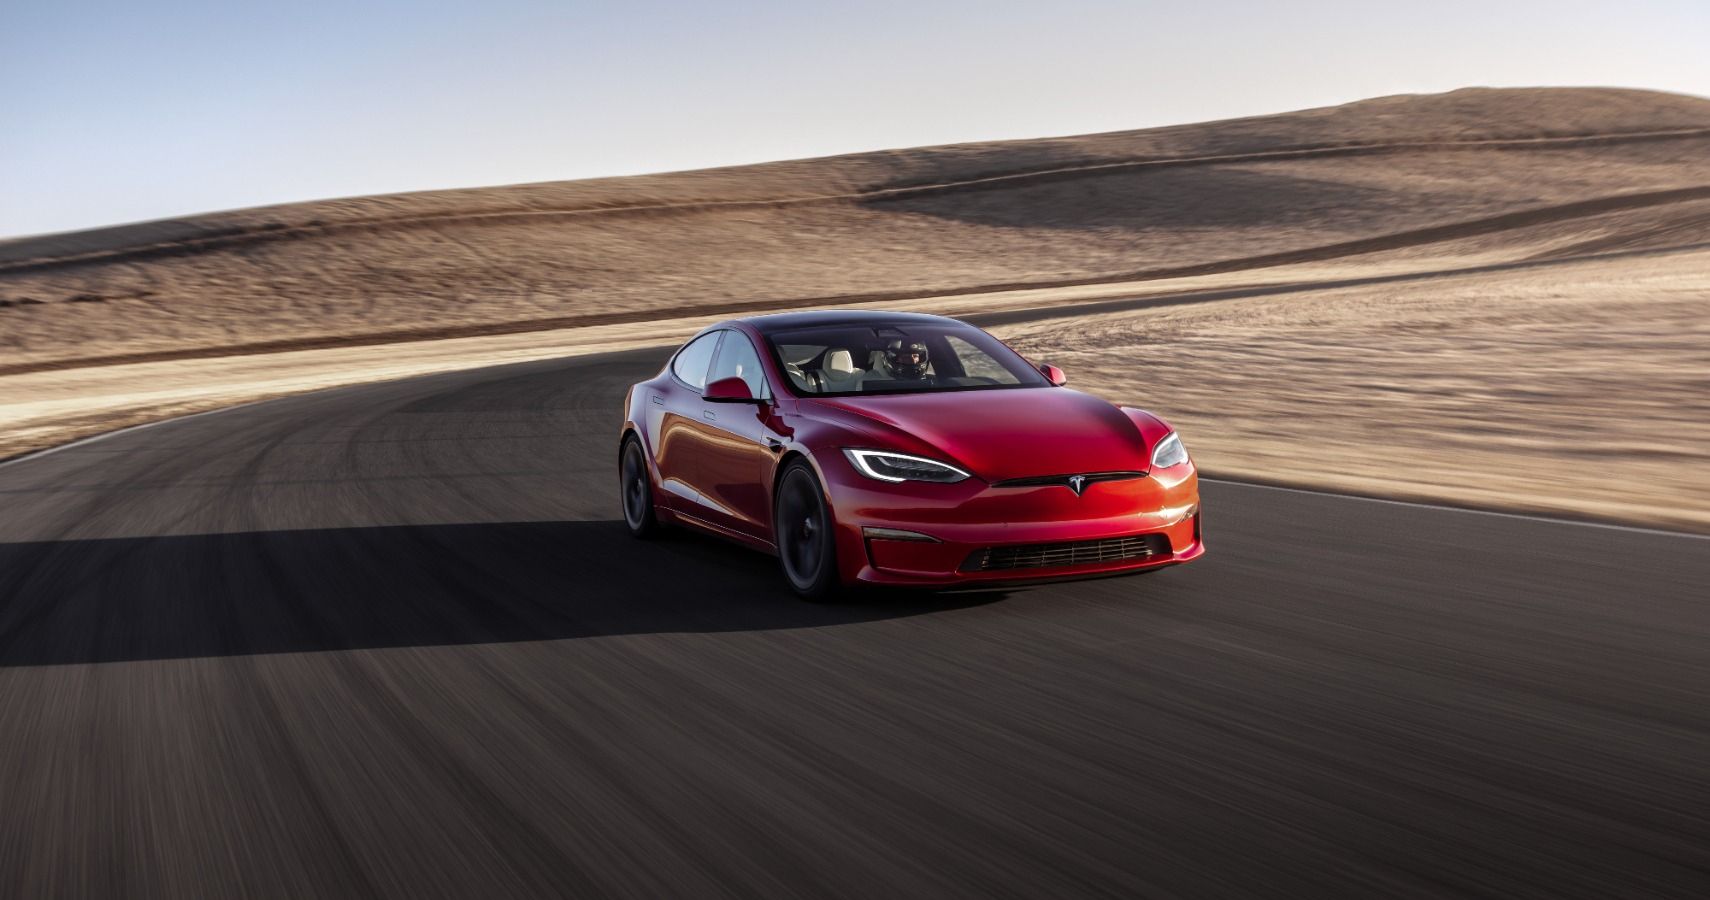 Red Tesla Model S Speeding On A Track